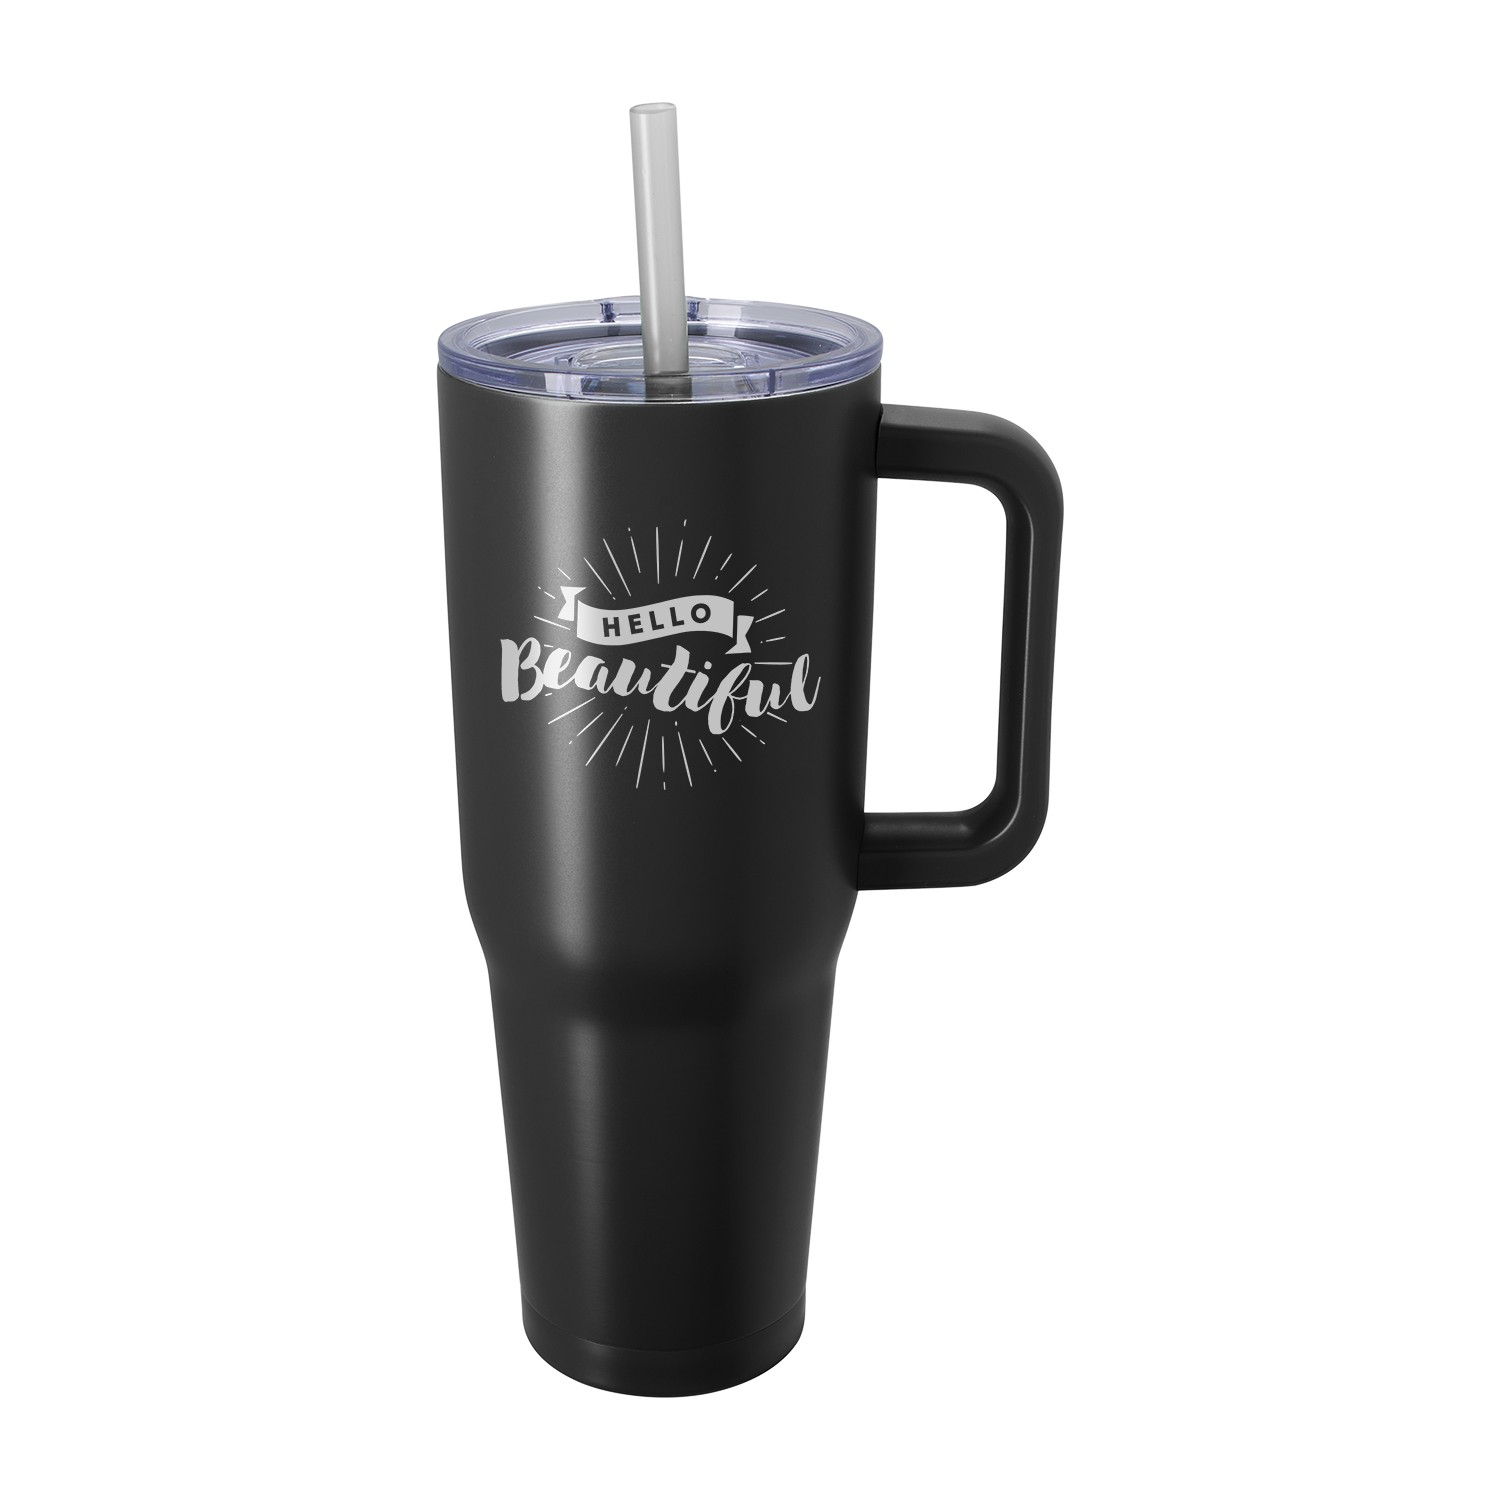 Mug-It Adjustable Handle for Pints, Tumblers, Flasks, Growlers